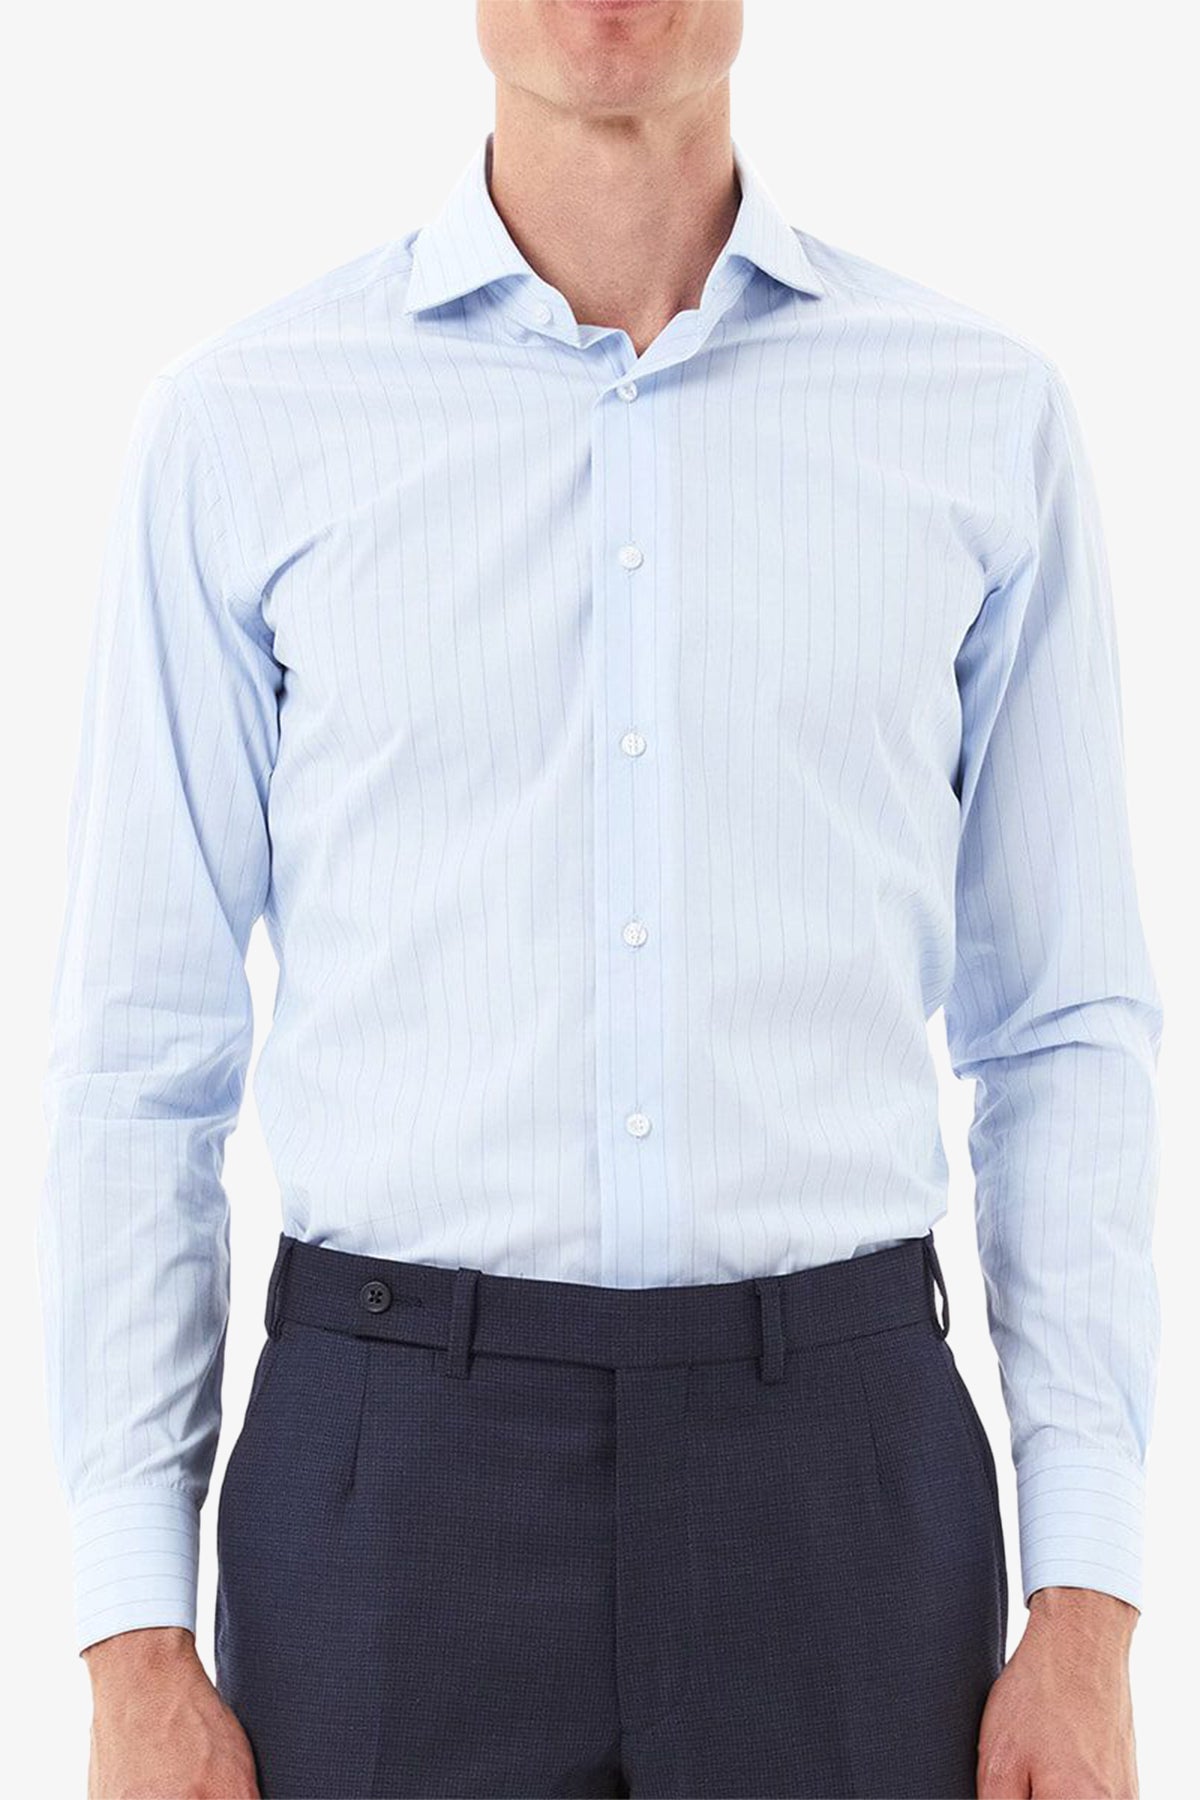 Alton - Light Blue stripe Shirt